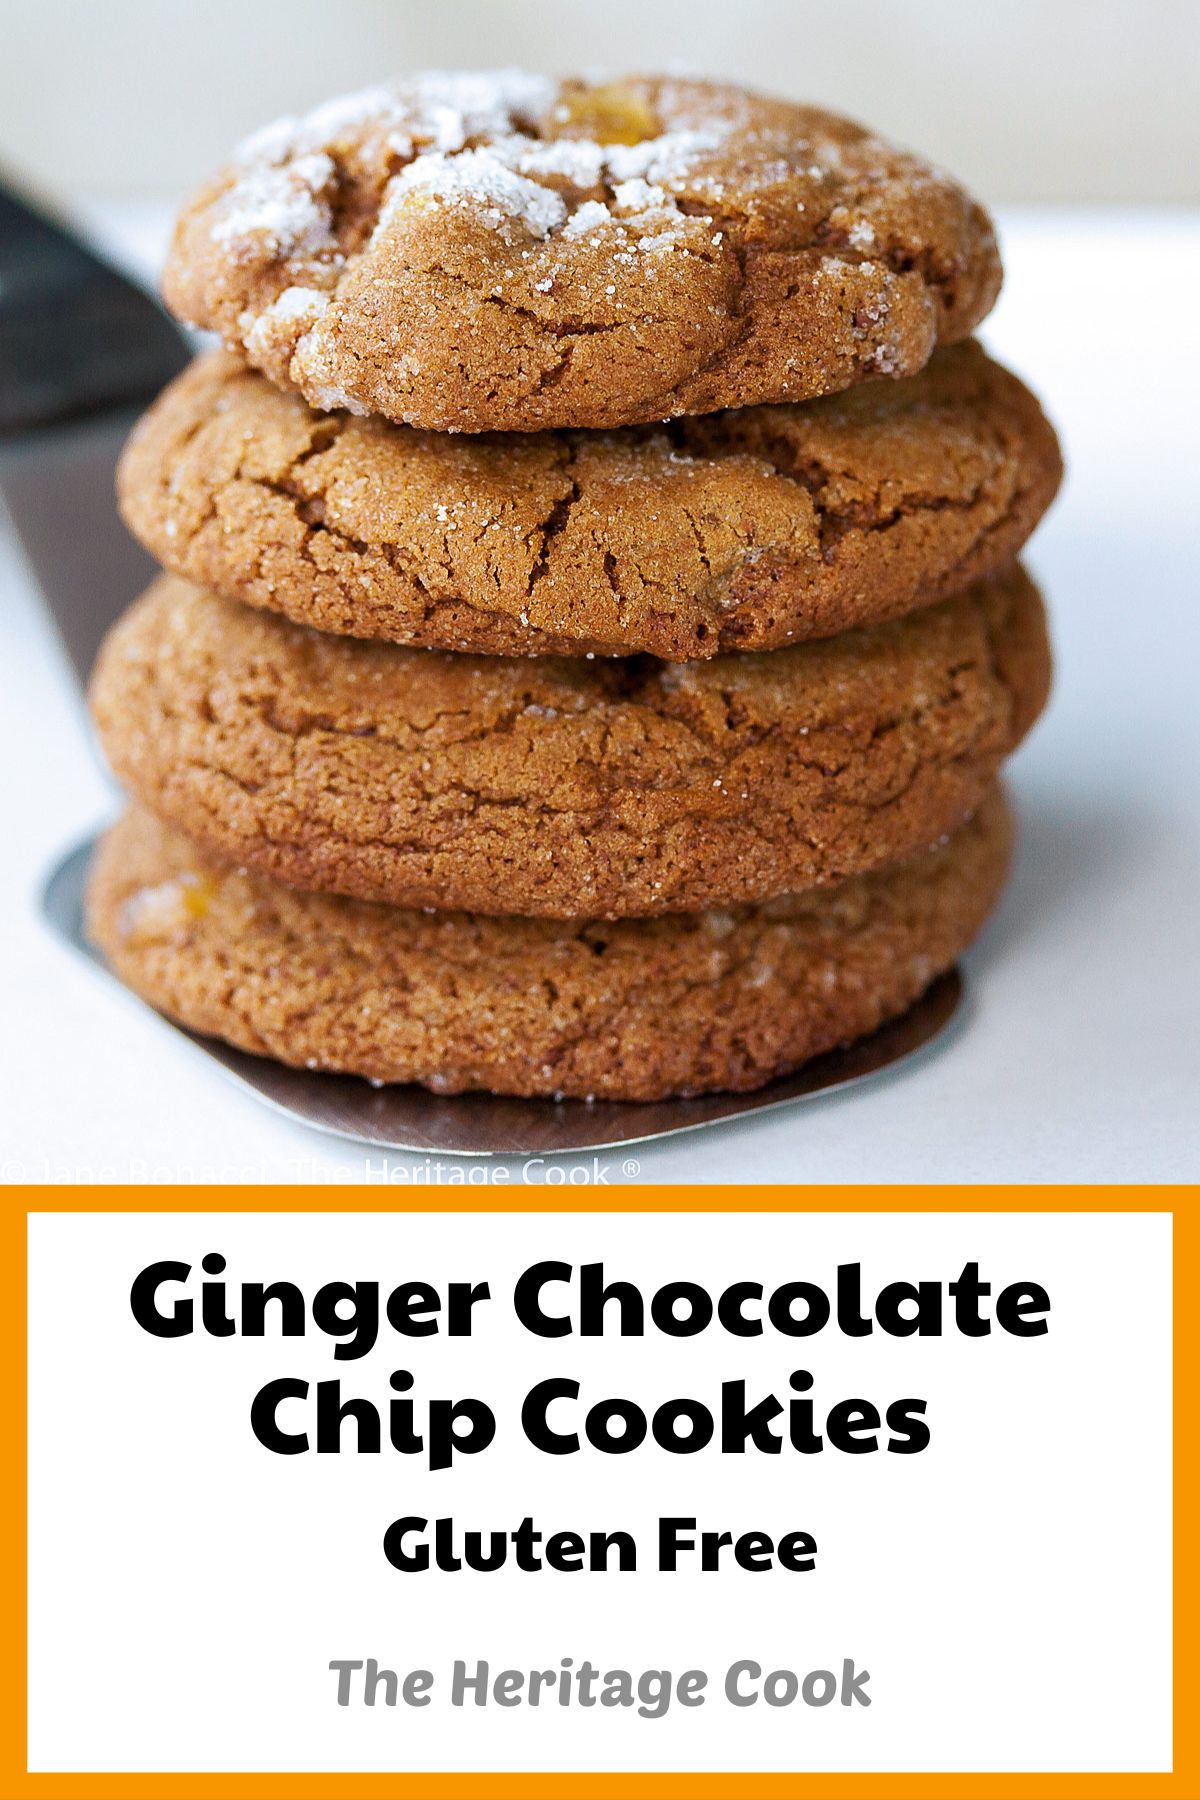 Ginger Chocolate Chip Cookies; © 2022 Jane Bonacci, The Heritage Cook